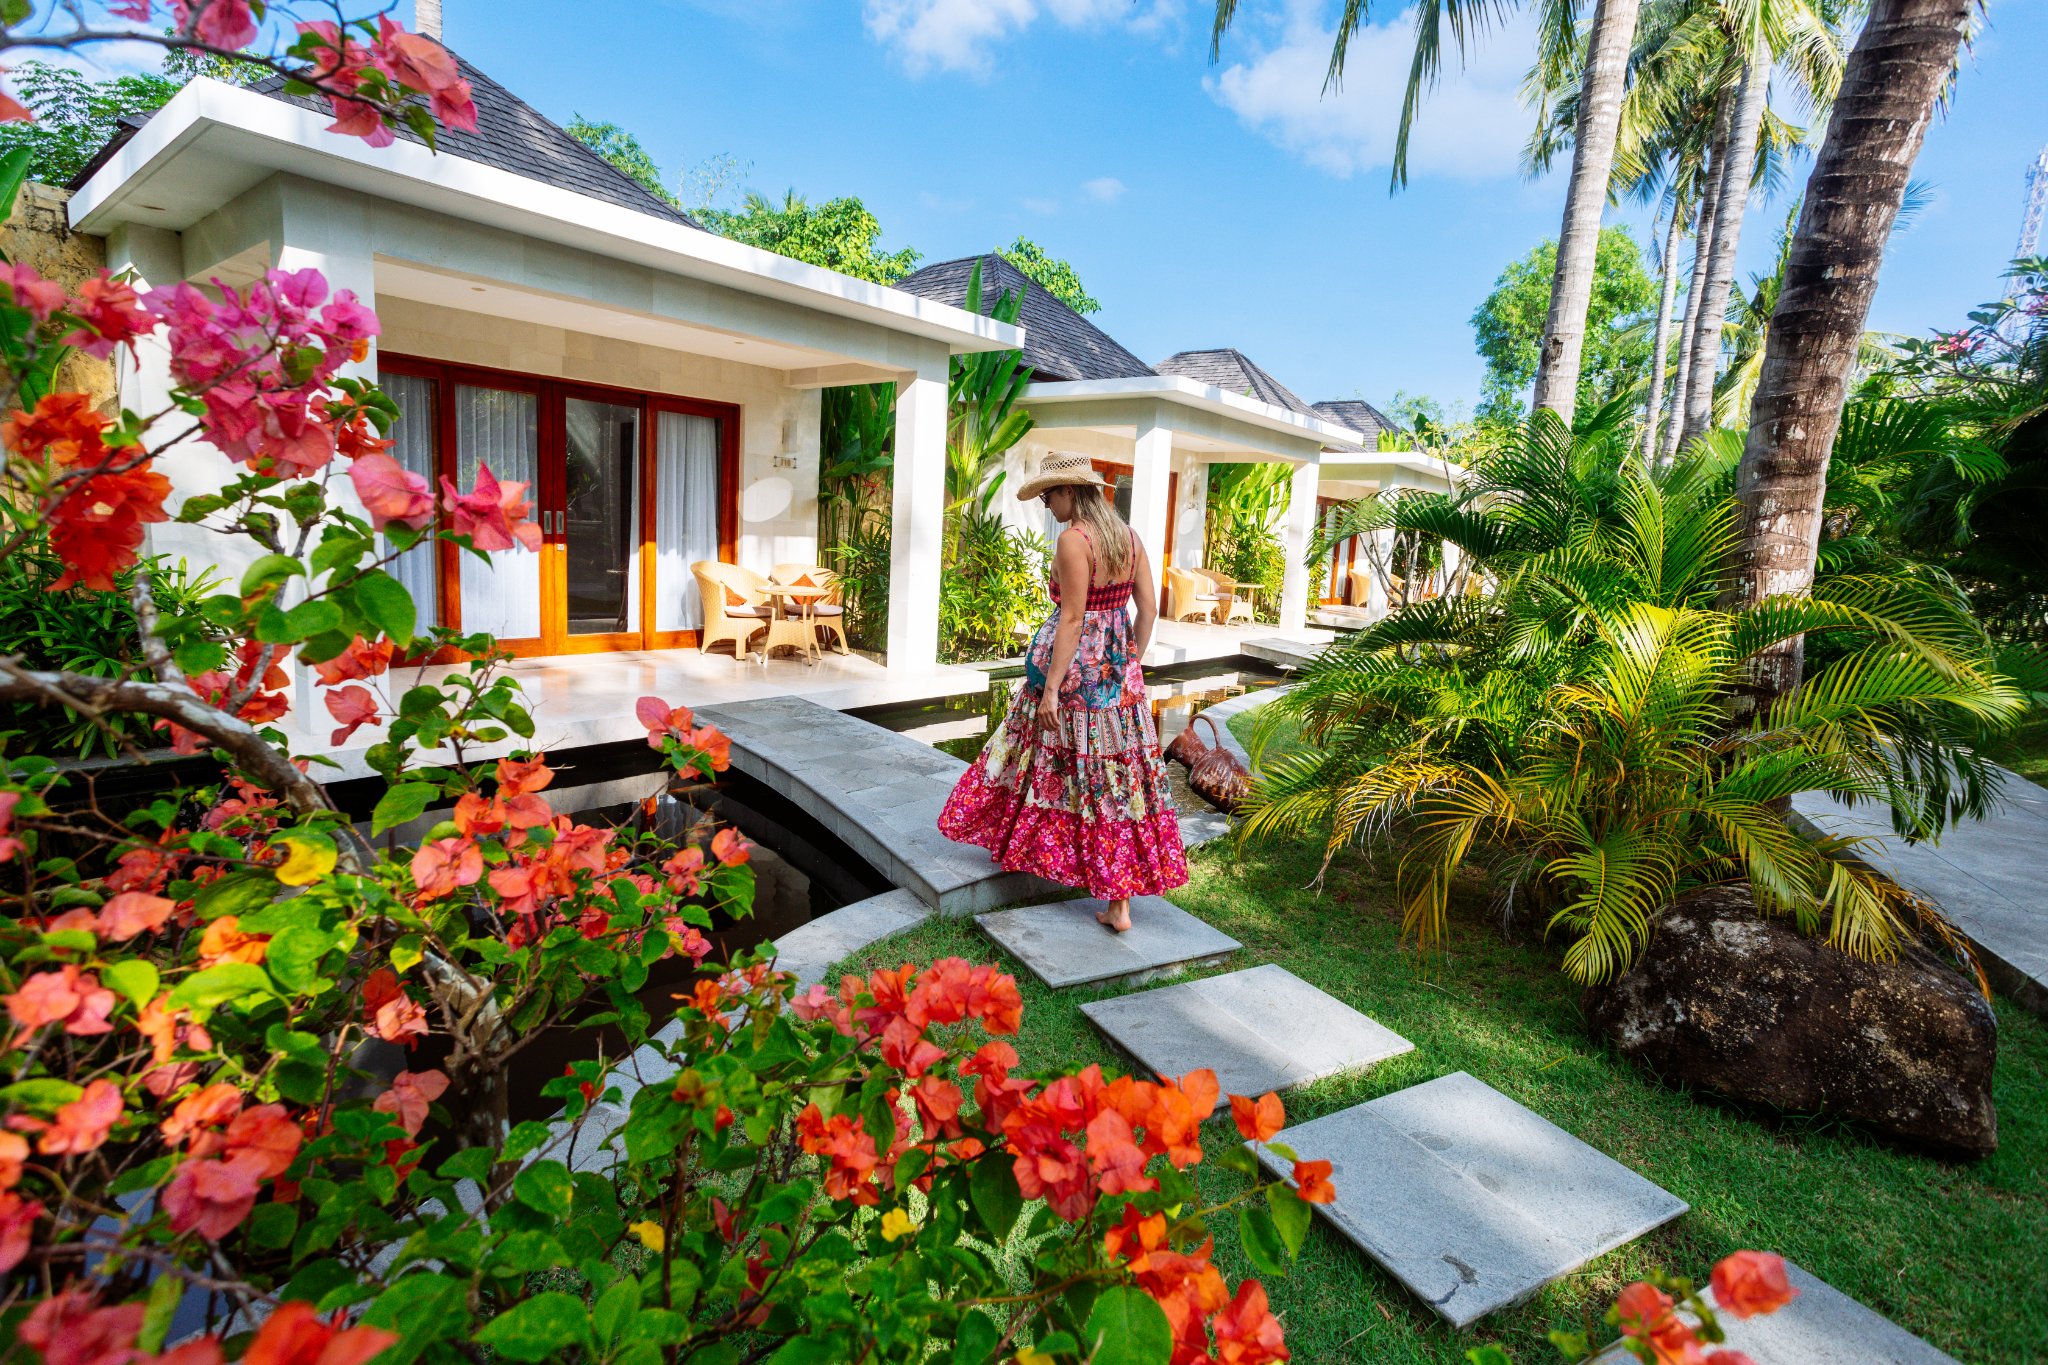 Luxury resort Kuta Lombok